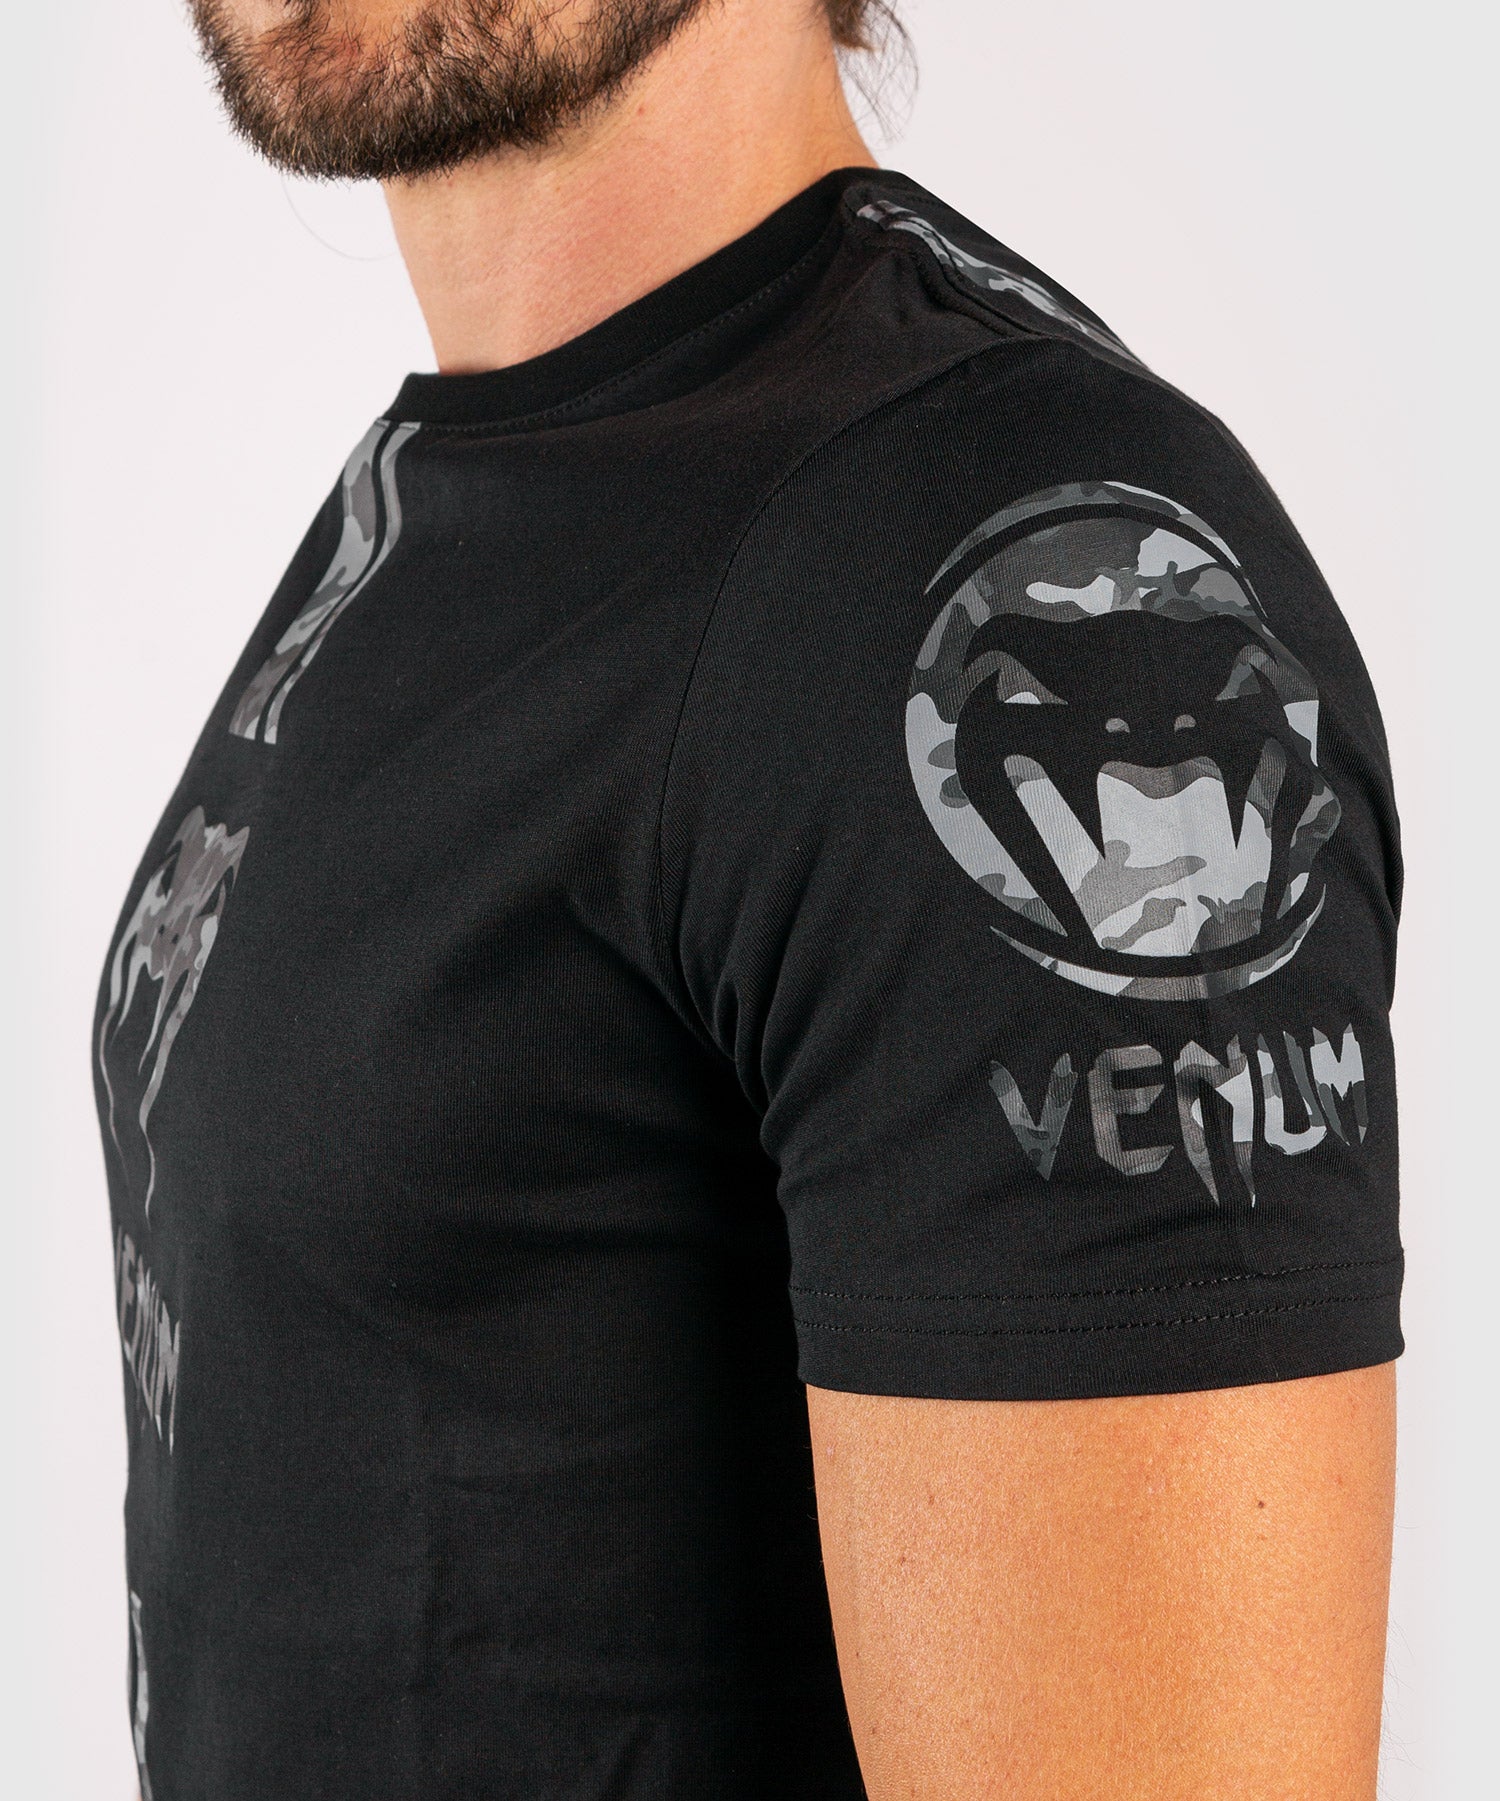 T-shirt Venum Logos - Noir/Urban camo - T-shirts